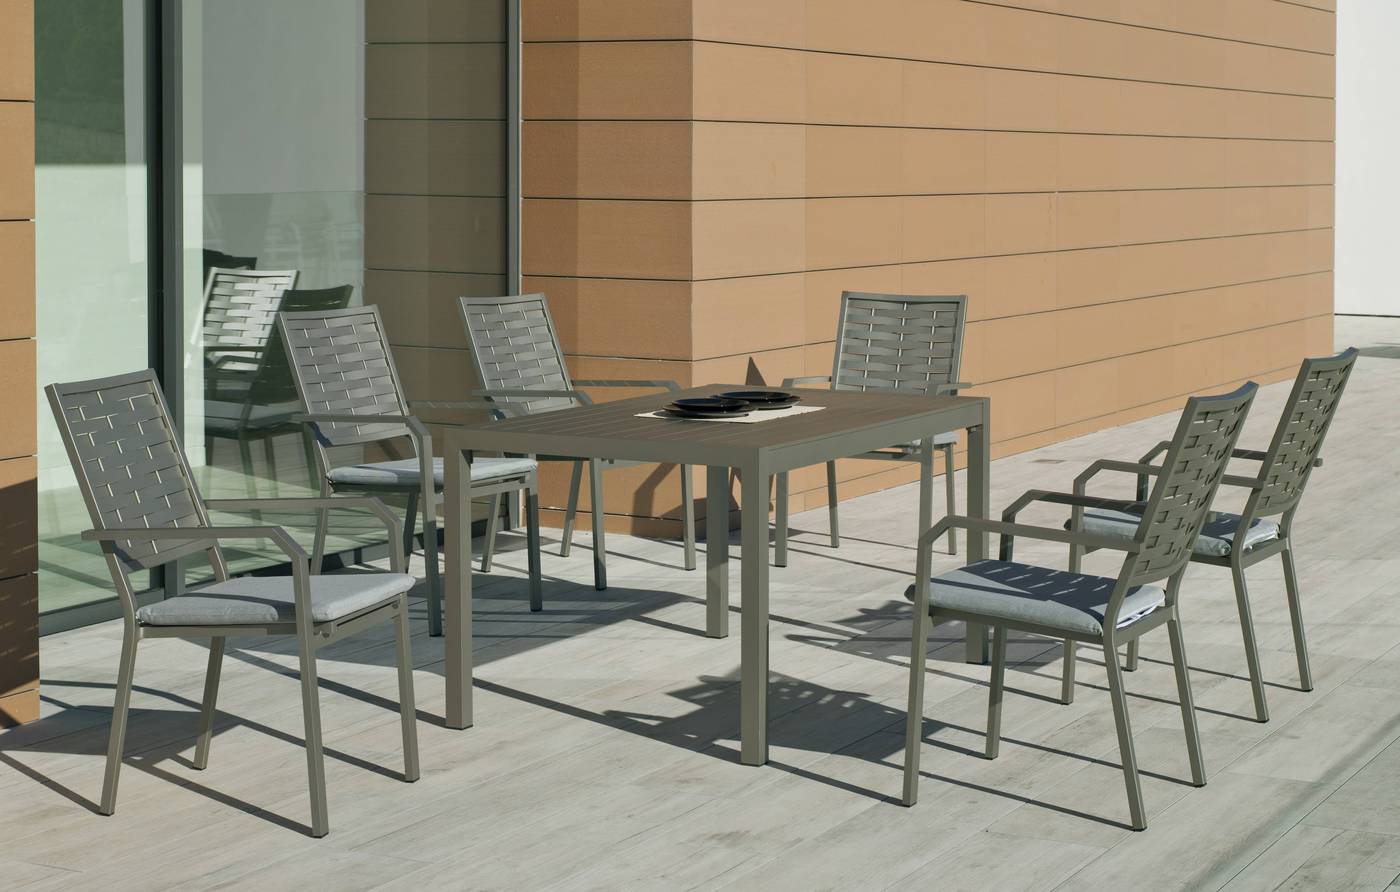 Set Aluminio Palma-Augusta 150-6 - Conjunto de aluminio luxe para jardín o terraza: Mesa rectangular 150 cm. + 6 sillones. Disponible en color blanco, plata, bronce, antracita y champagne.